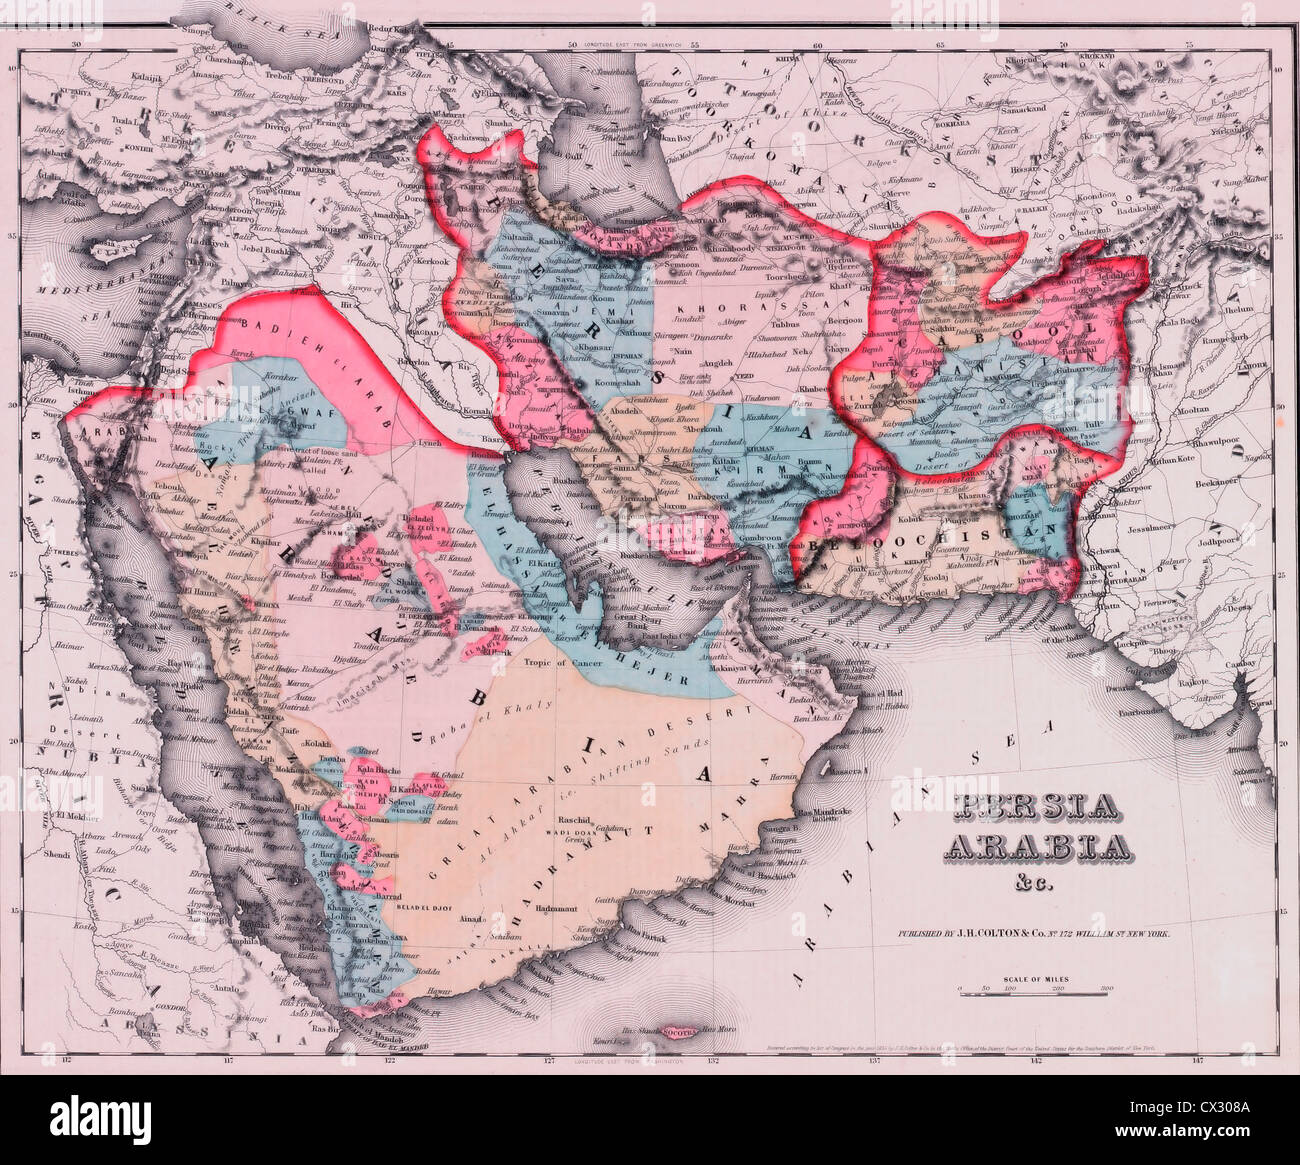 Persia and Arabia Map, circa 1855 Stock Photo